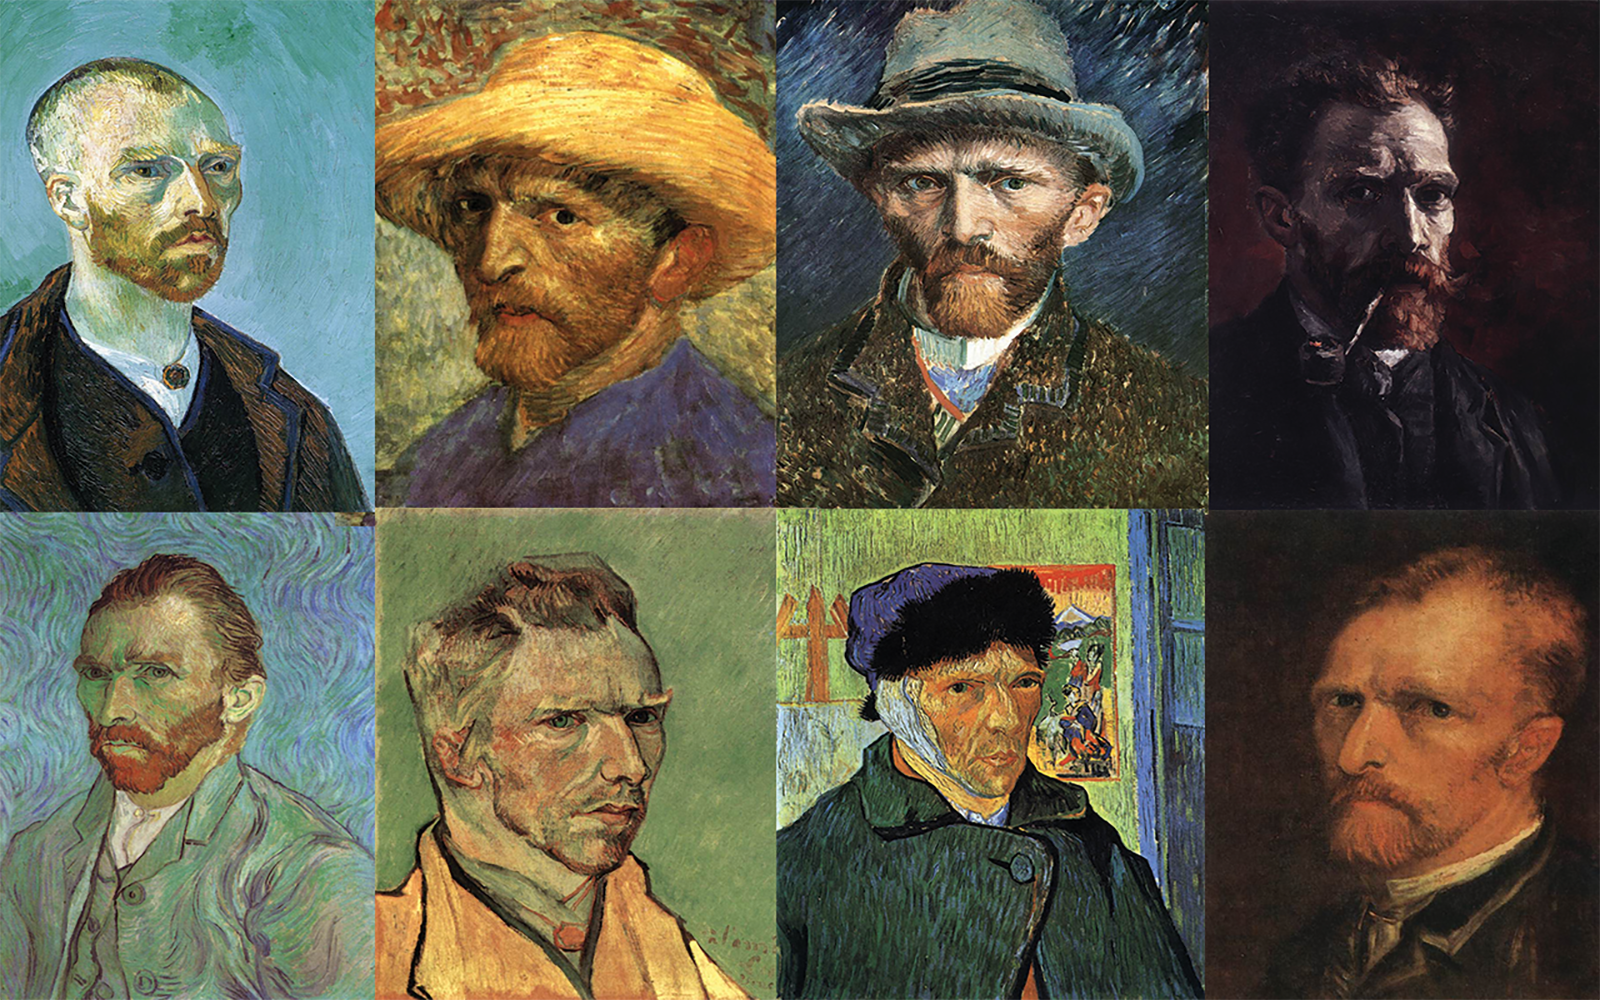 The Original ‘Self-Portrait’ King – 10 Paintings To See Van Gogh Through His Own Eyes